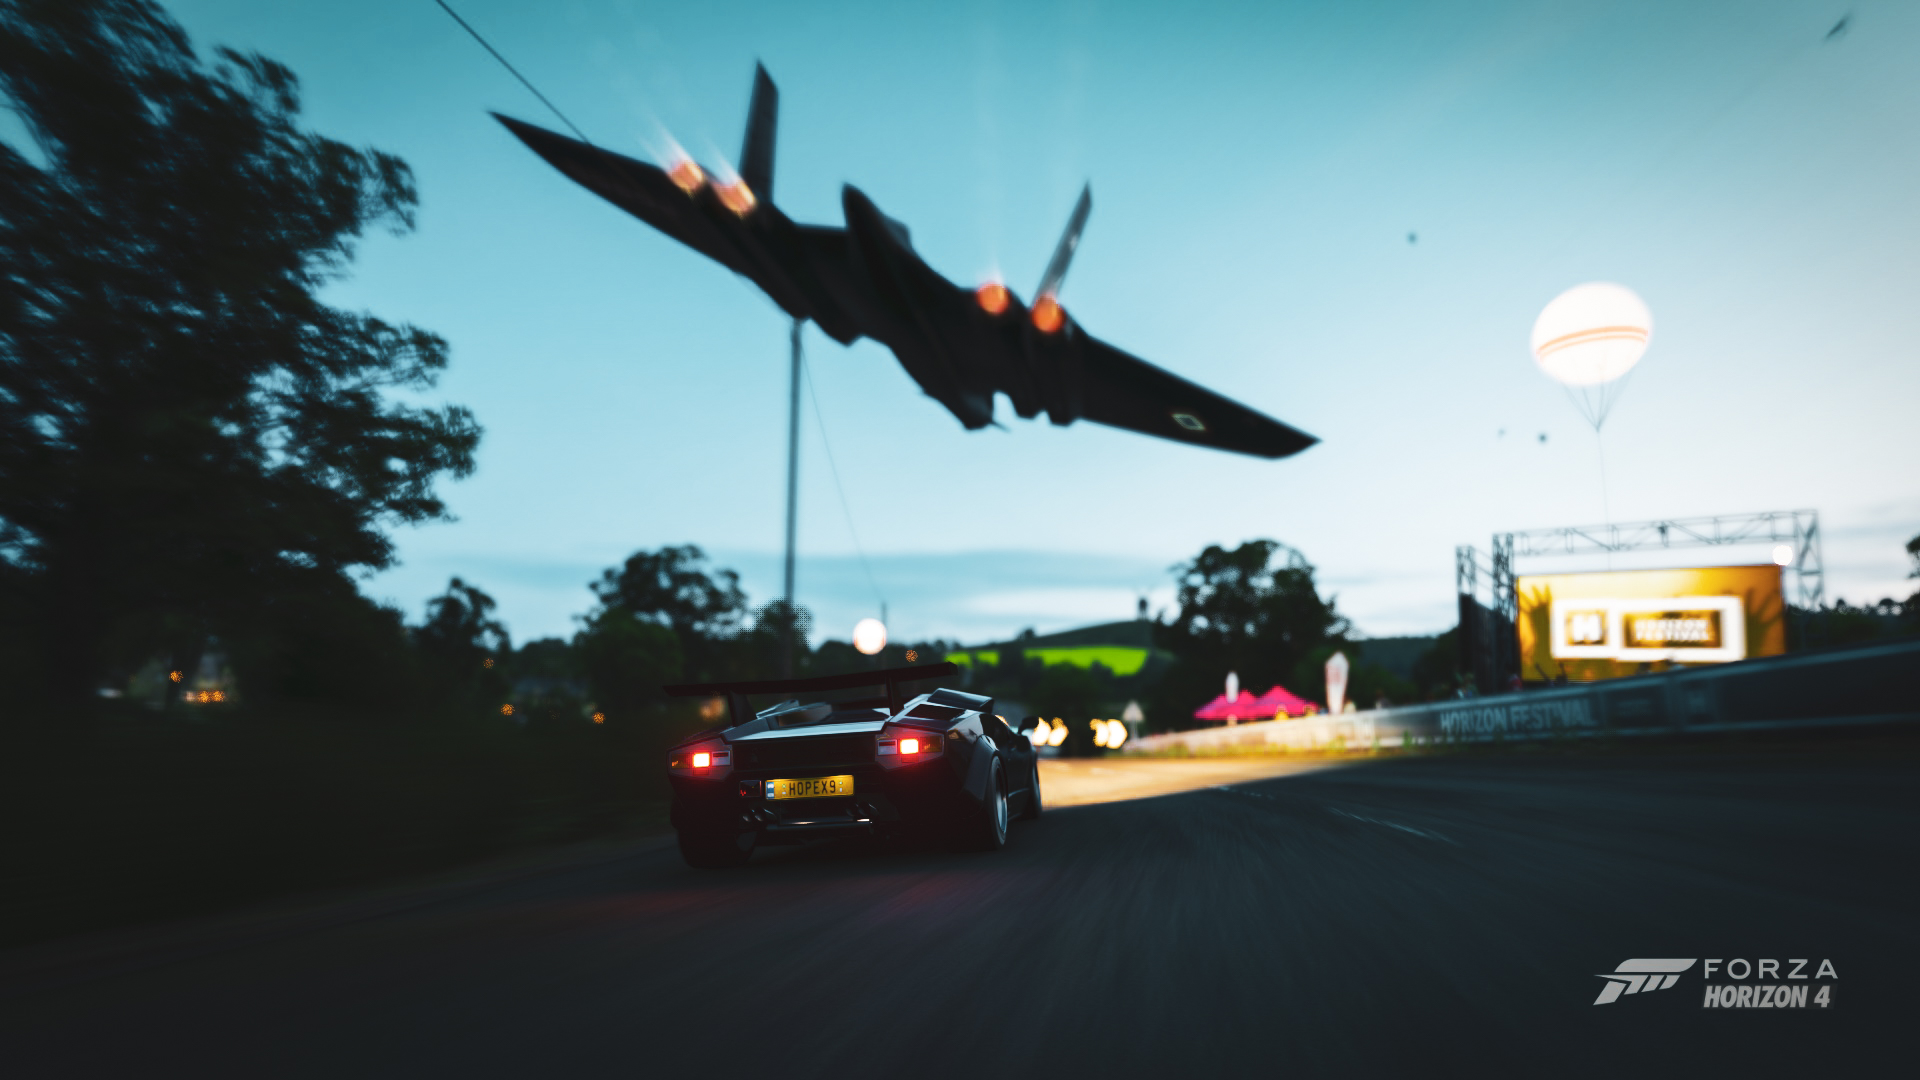 General 1920x1080 Forza Horizon 4 car video games Lamborghini Countach jet fighter Lamborghini